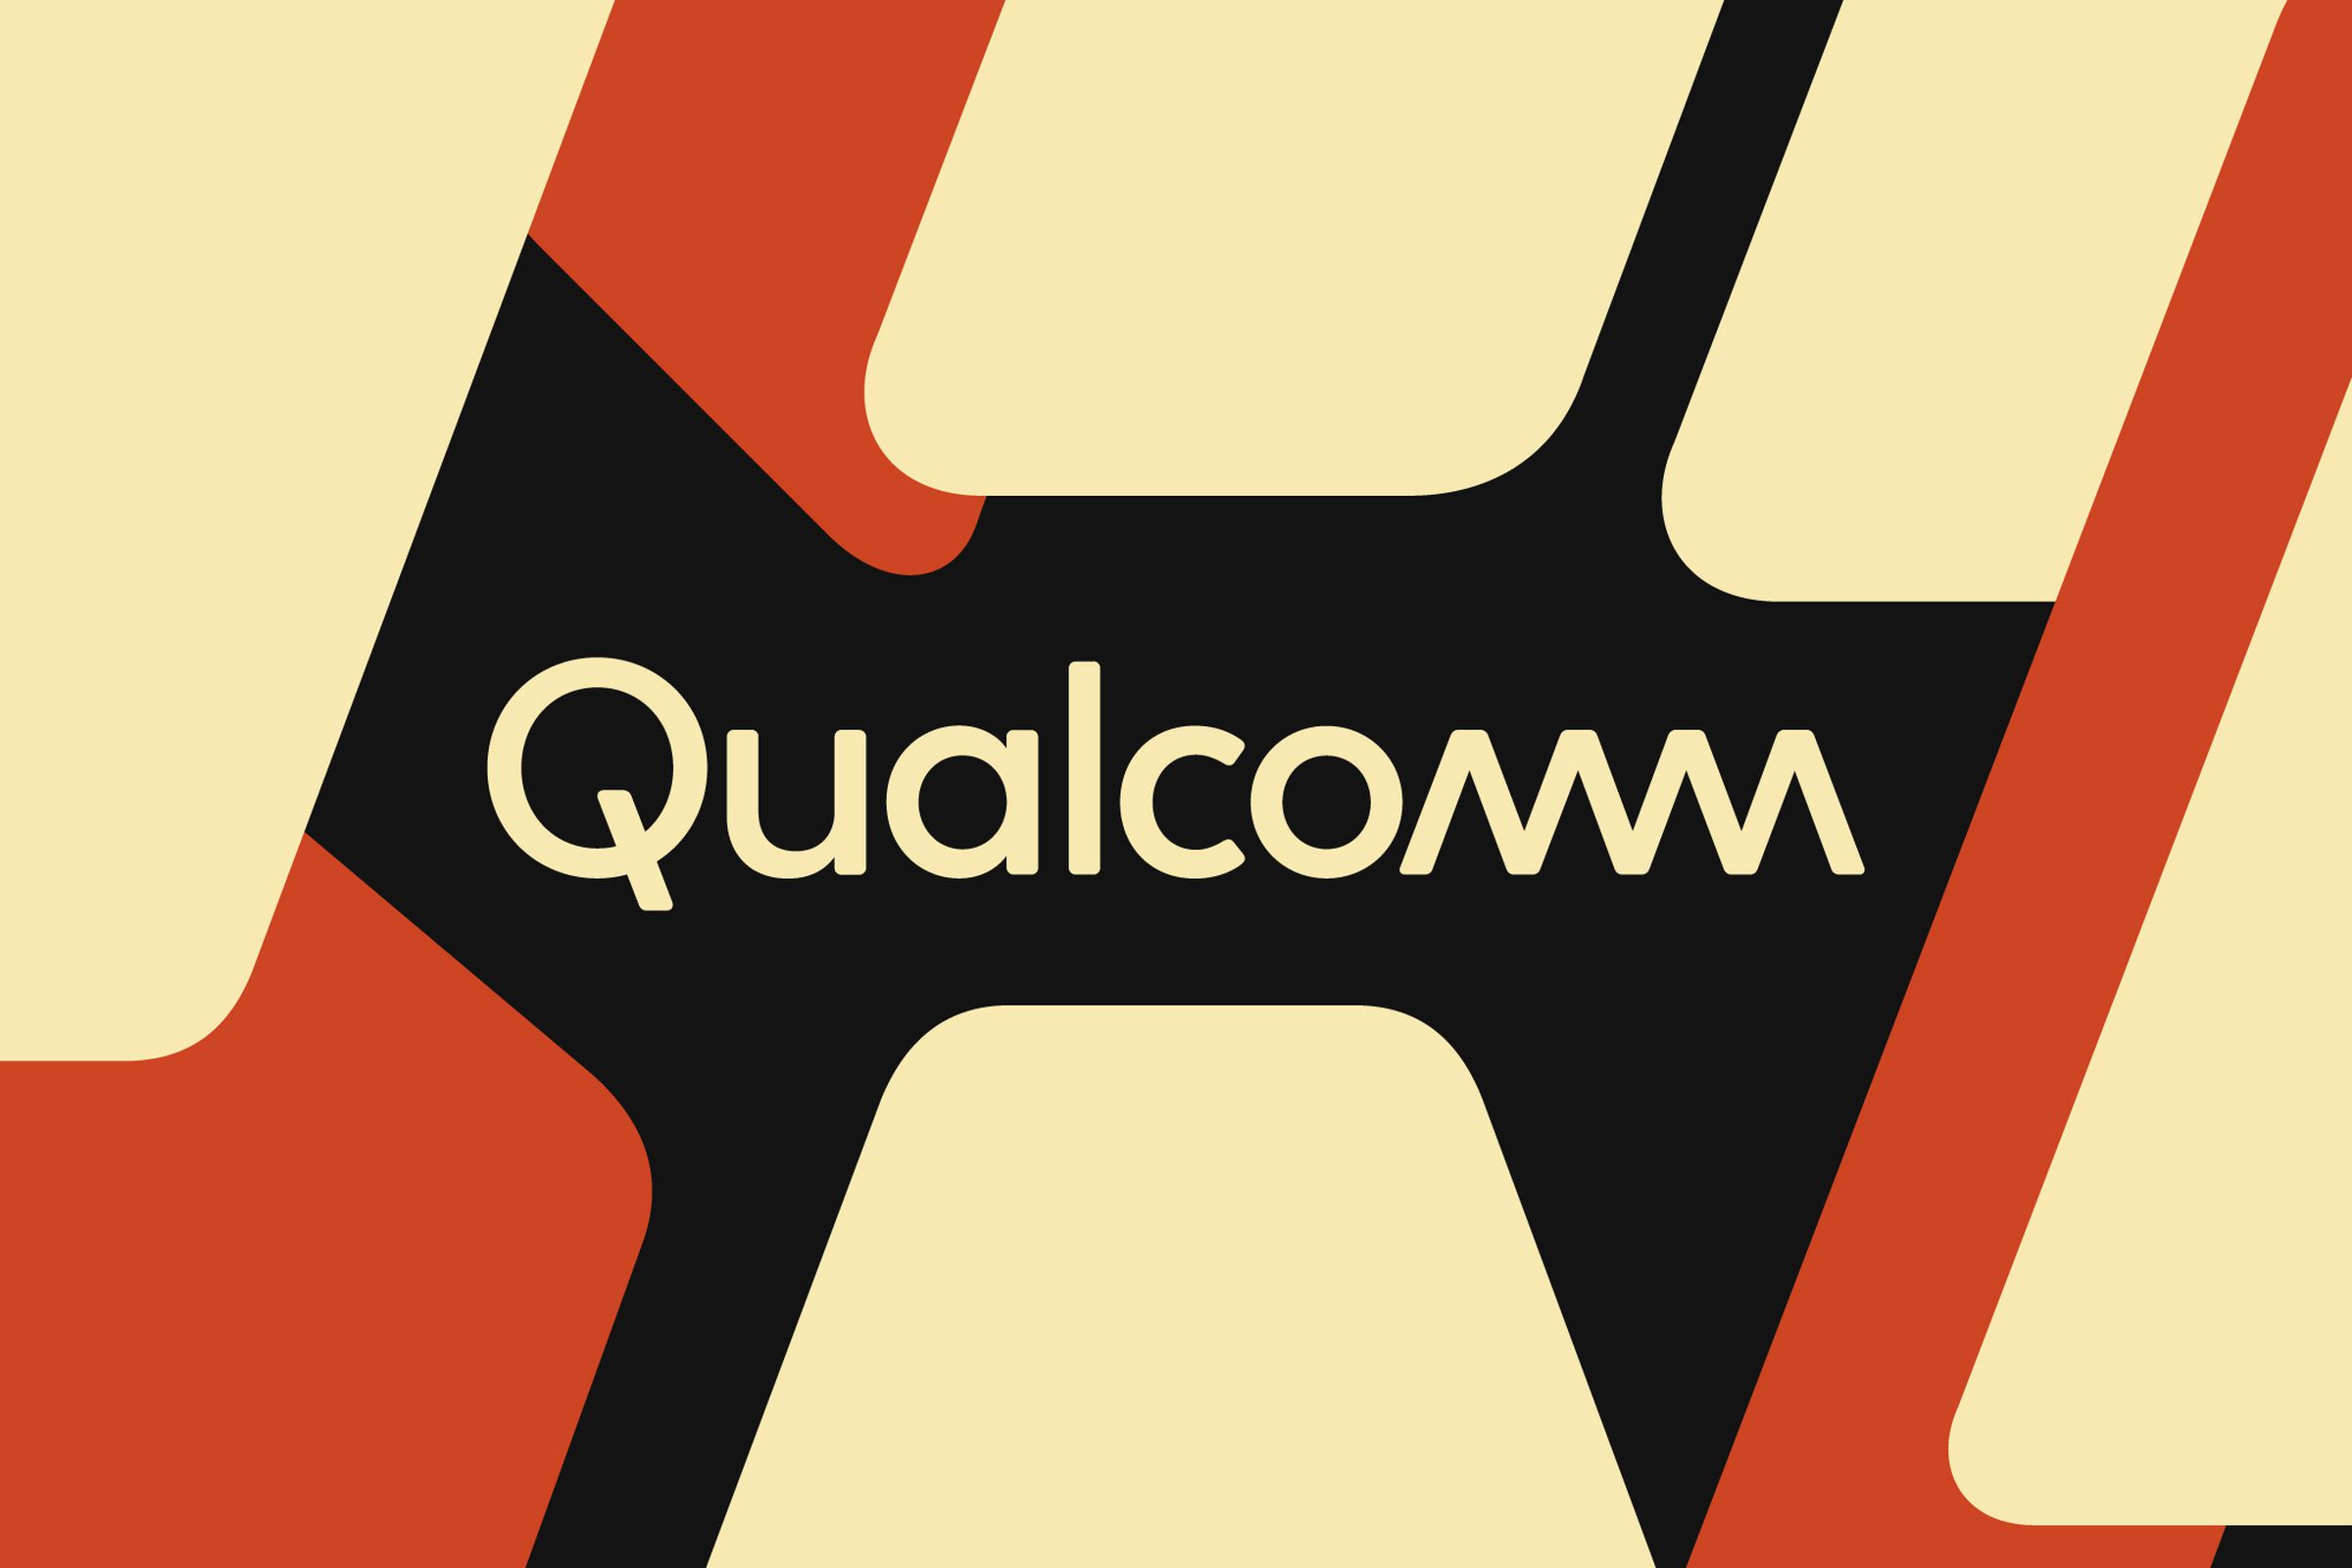 Qualcomm logo over a multi-colored illustration